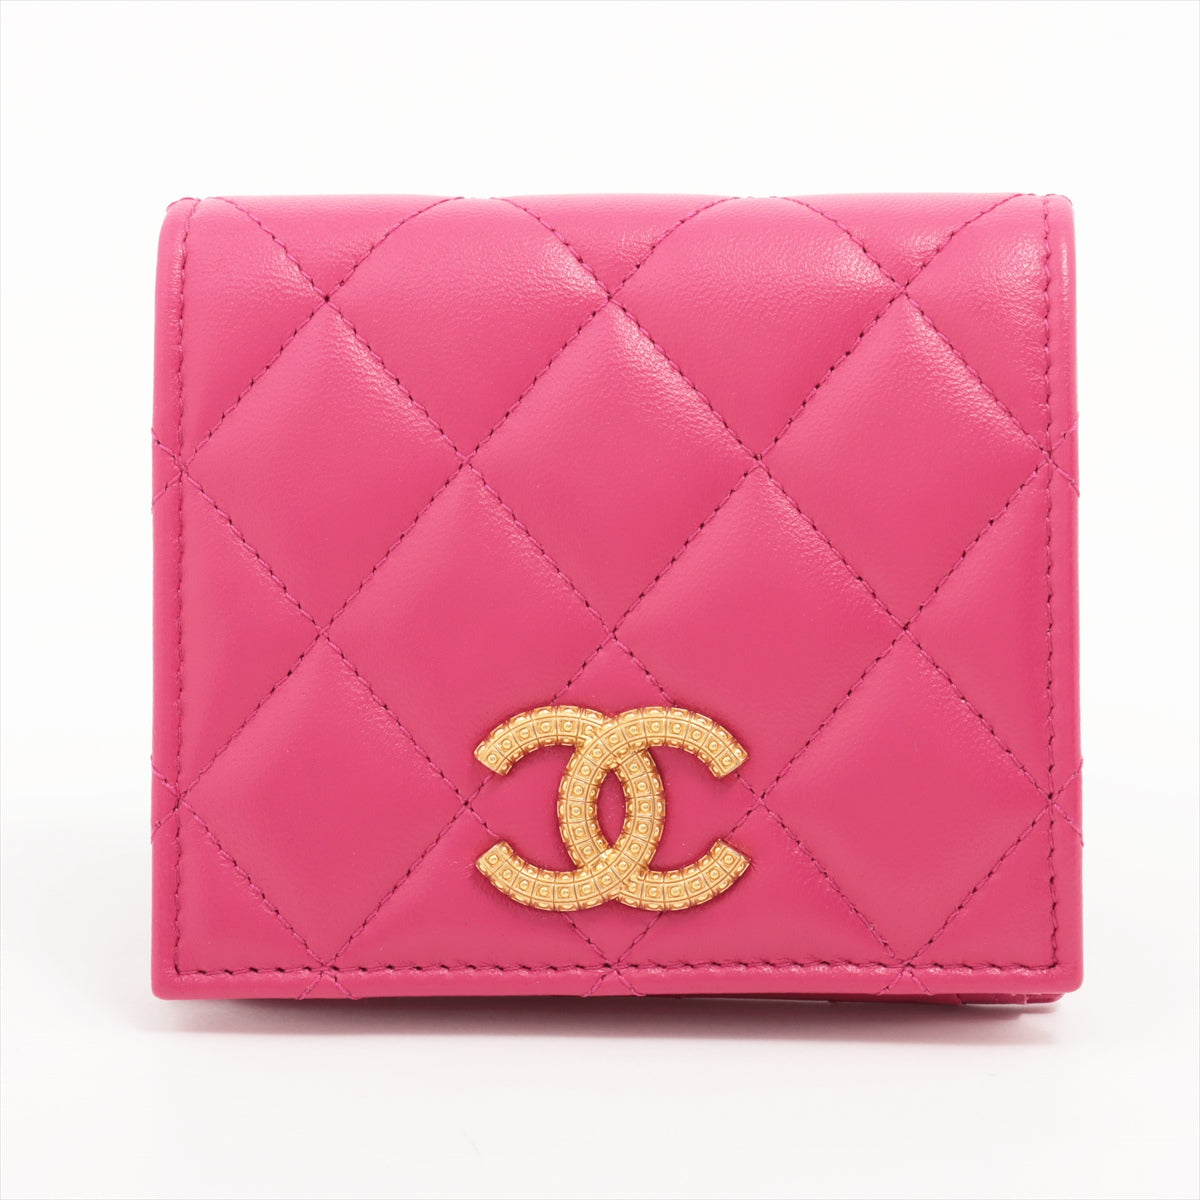 Chanel Matelasse Lambskin Compact Wallet Pink Gold Metal fittings random